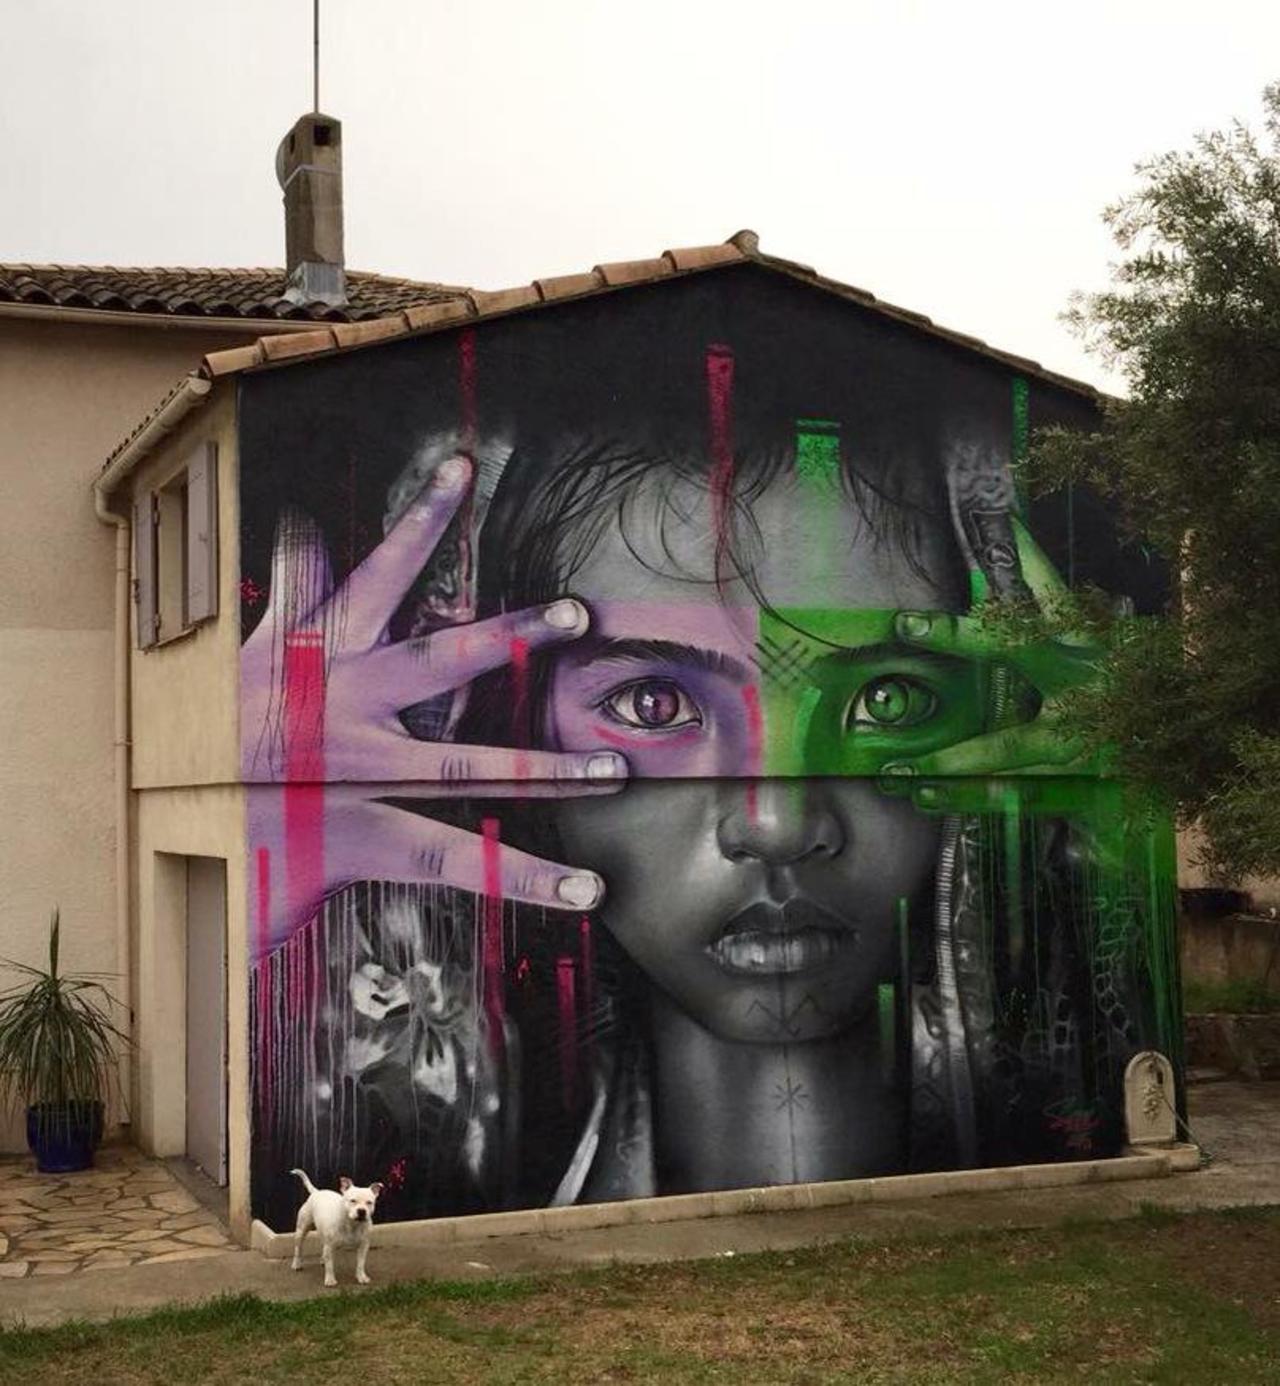 'Open your mind'
Street Art by Guillaume Dusotoit 

#art #arte #graffiti #streetart http://t.co/628fTNoMFx yo